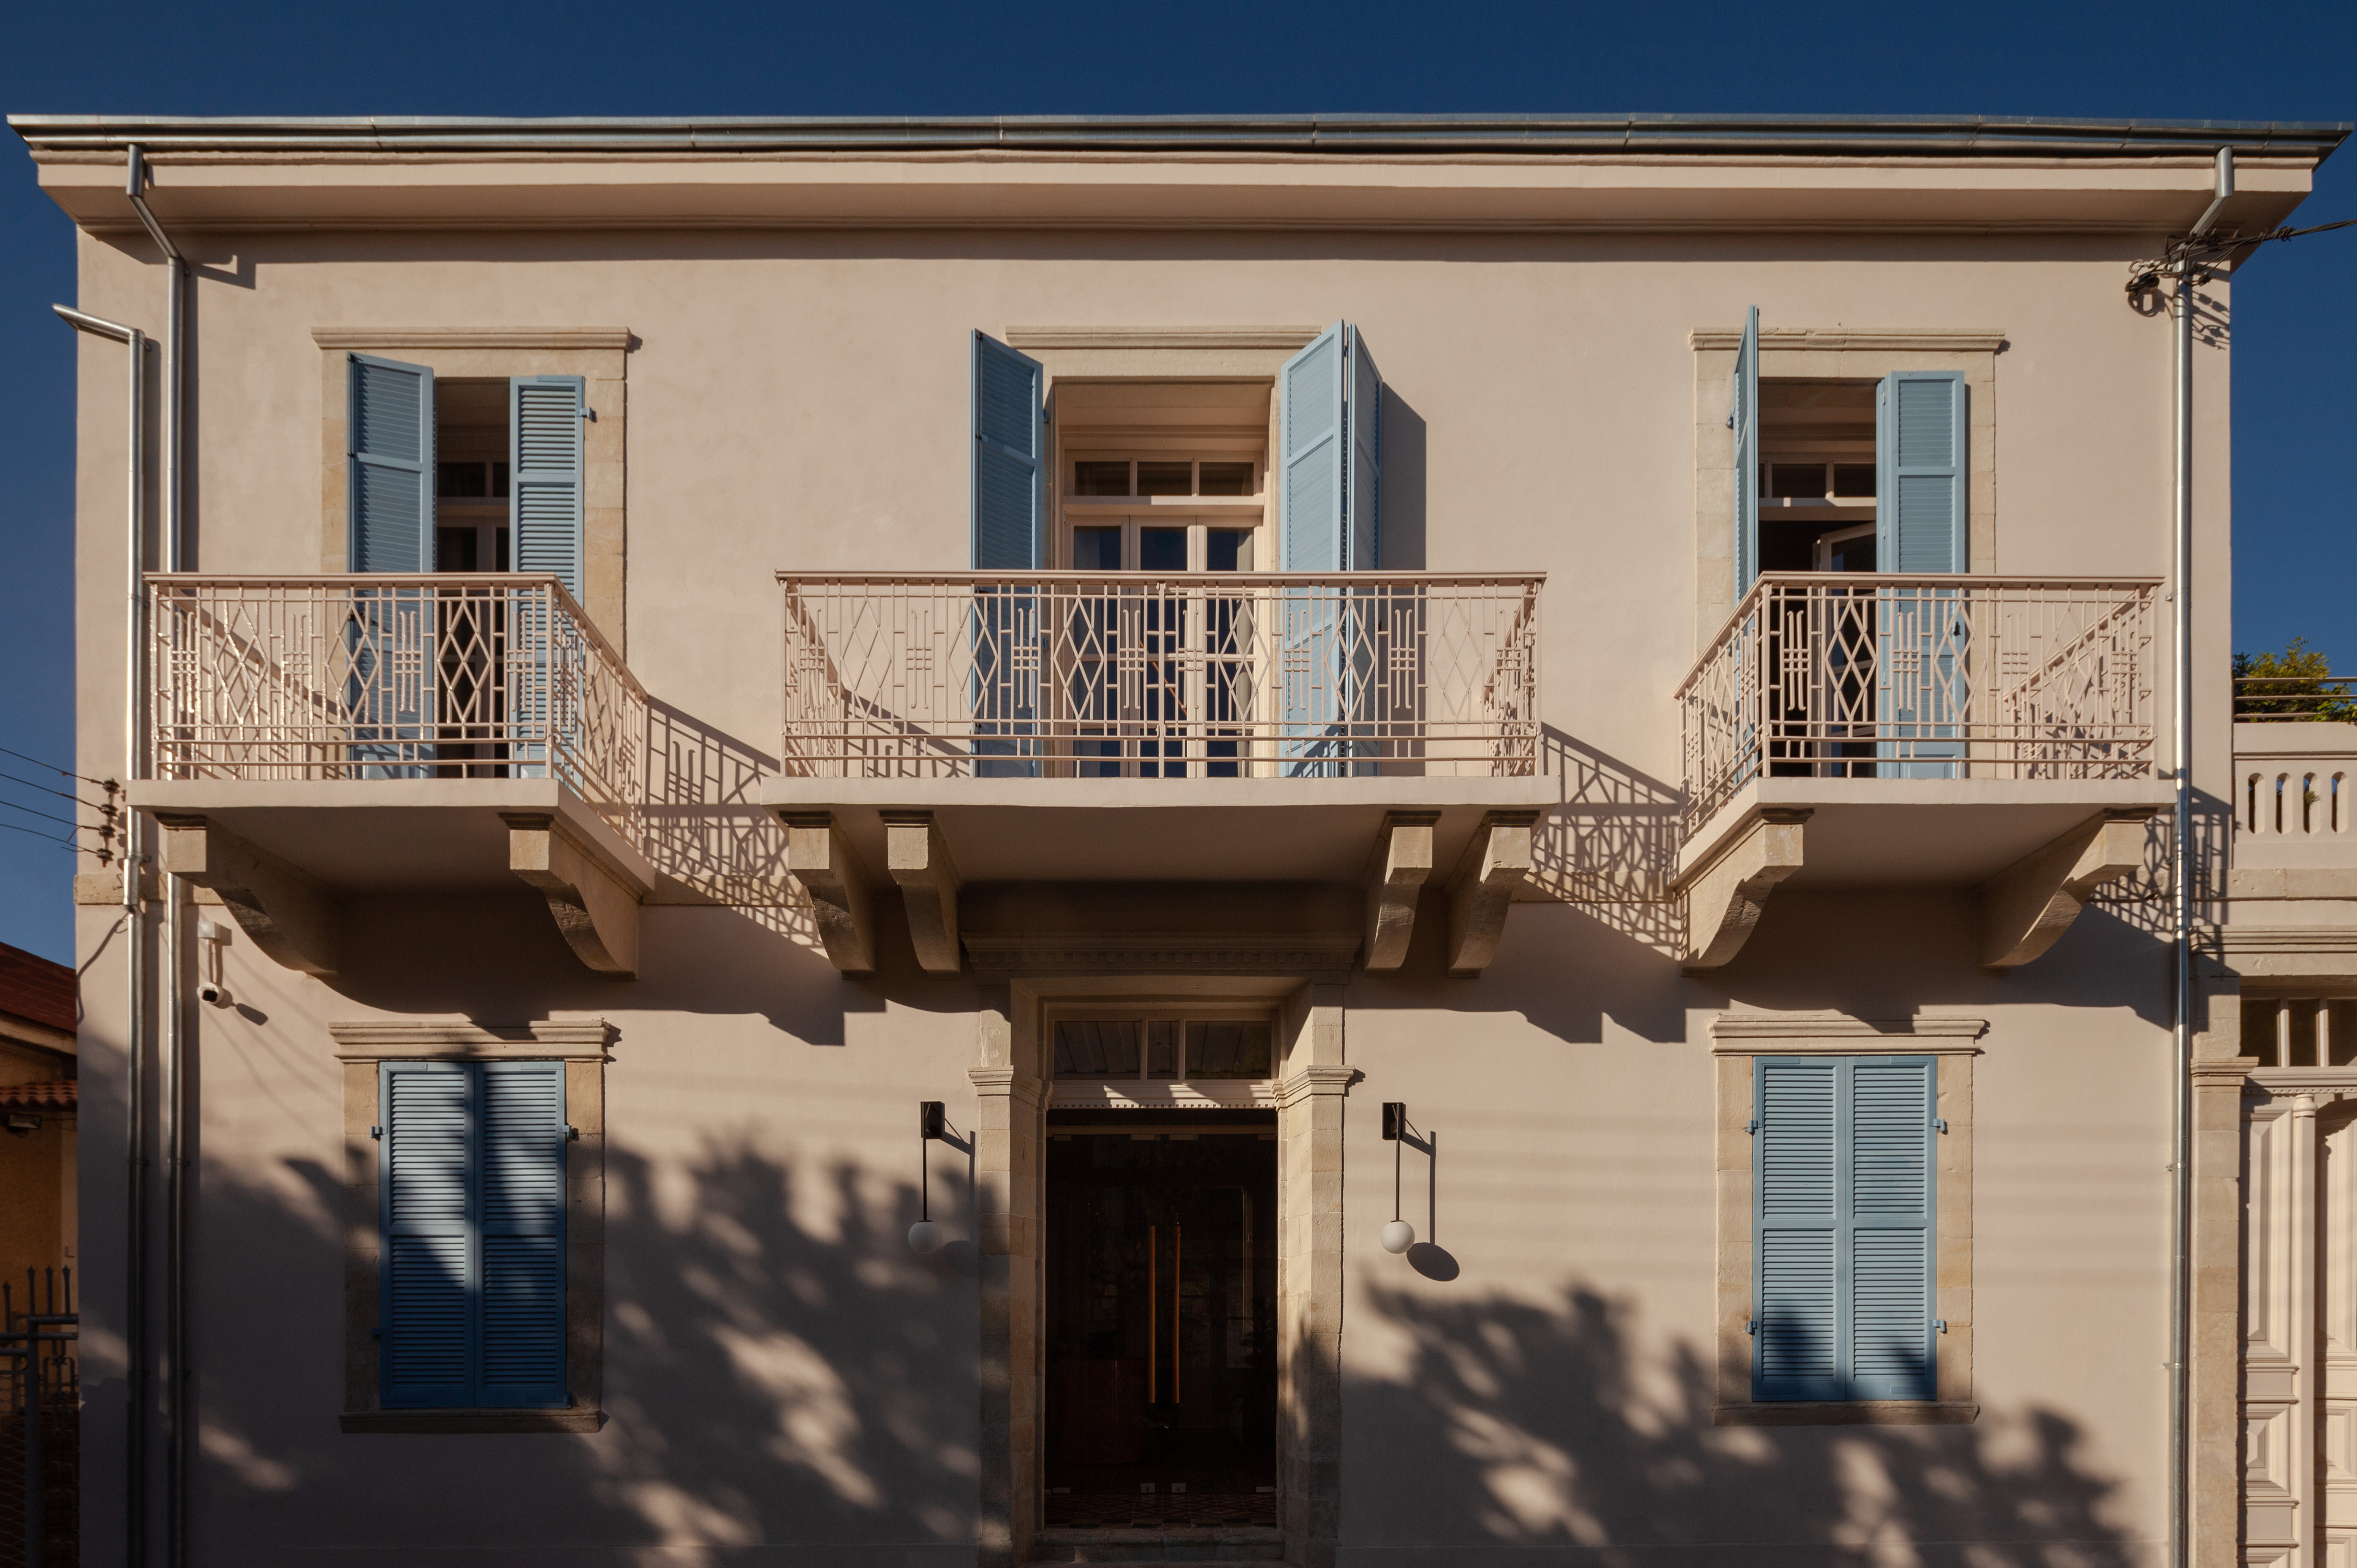 image Limassol hotel highlights benefits of restoring listed buildings